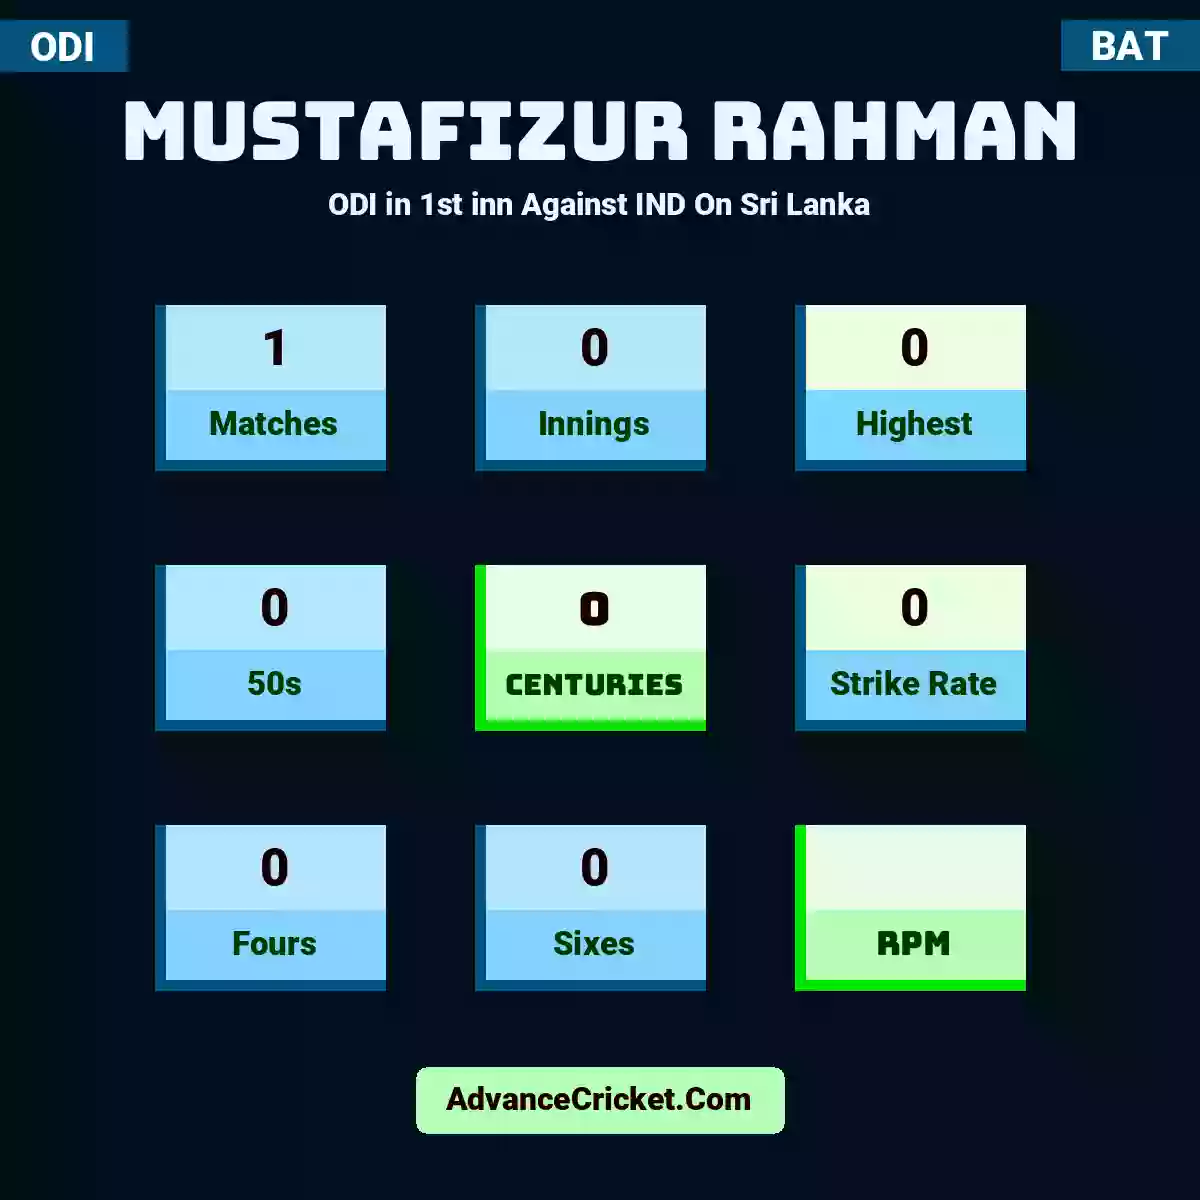 Mustafizur Rahman ODI  in 1st inn Against IND On Sri Lanka, Mustafizur Rahman played 1 matches, scored 0 runs as highest, 0 half-centuries, and 0 centuries, with a strike rate of 0. M.Rahman hit 0 fours and 0 sixes.